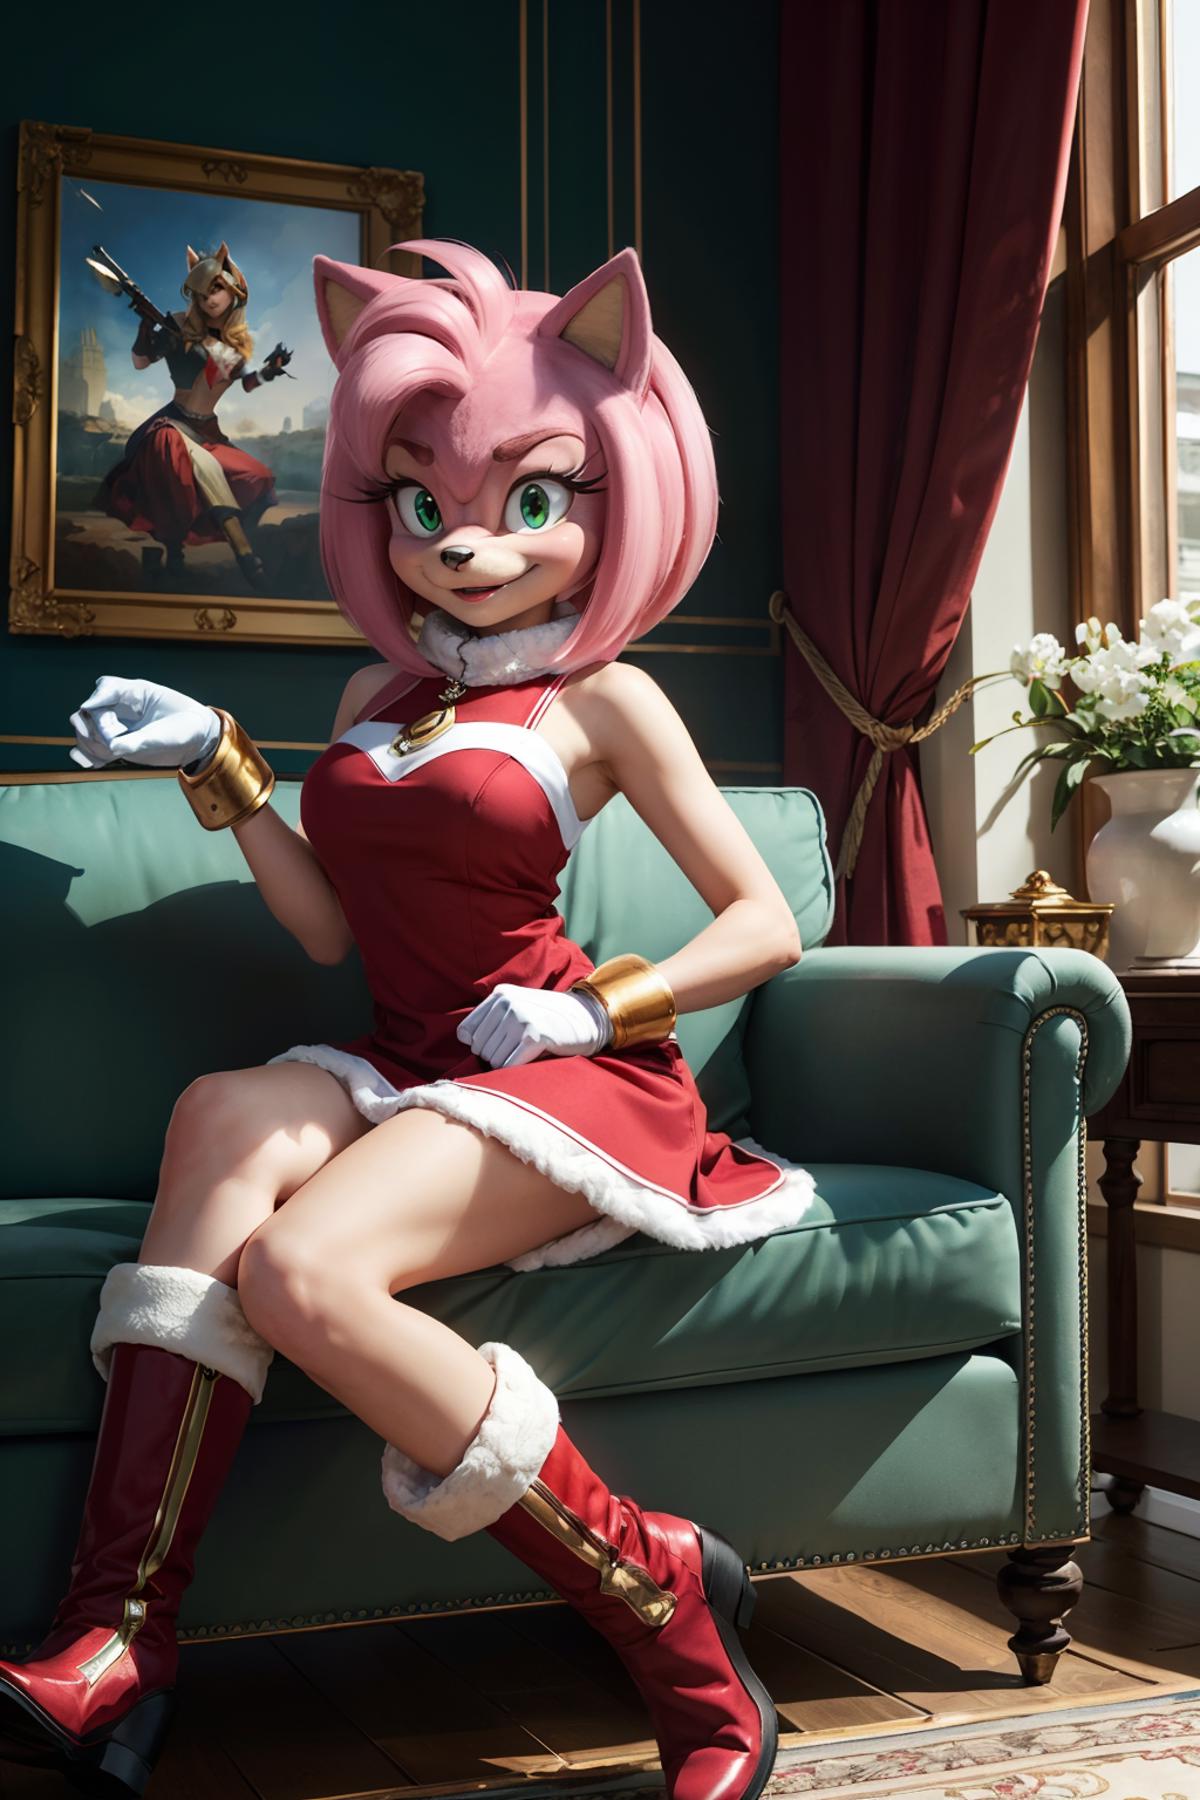 Amy Rose - Sonic image by wikkitikki